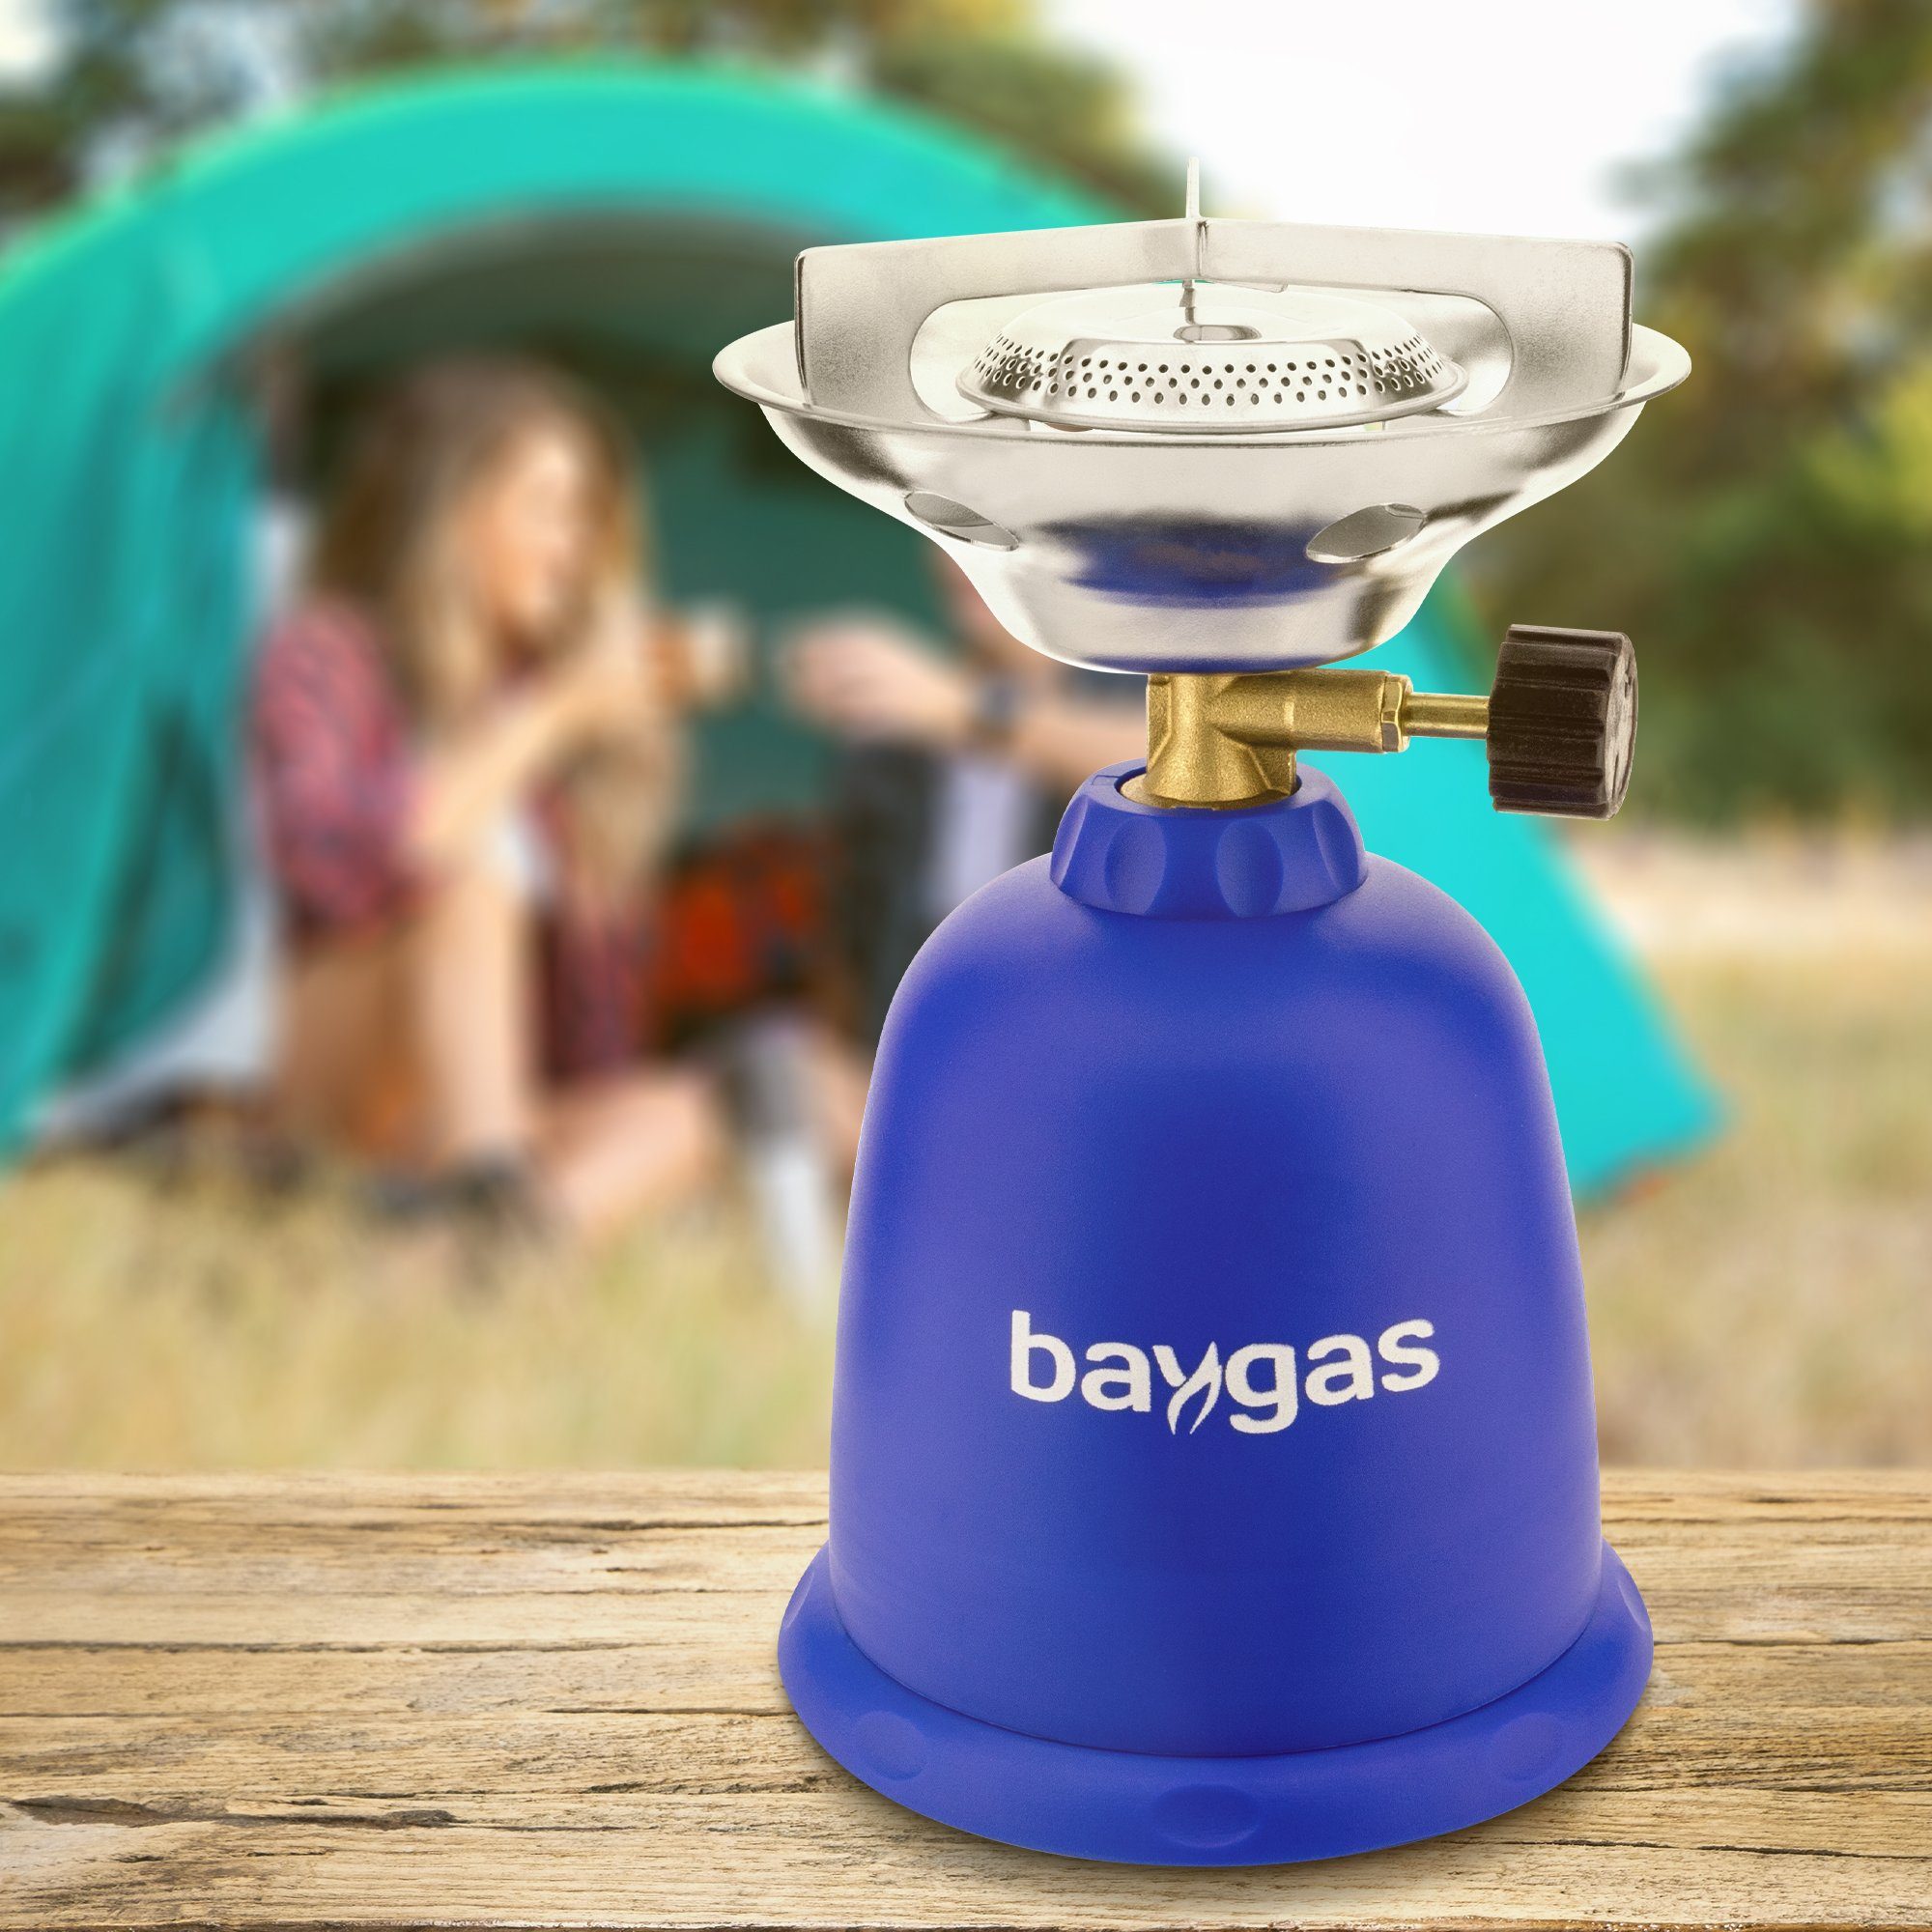 baygas Gaskocher Kunststoffkörper Campingkocher Outdoor für 1- Baygas Blau Flammig